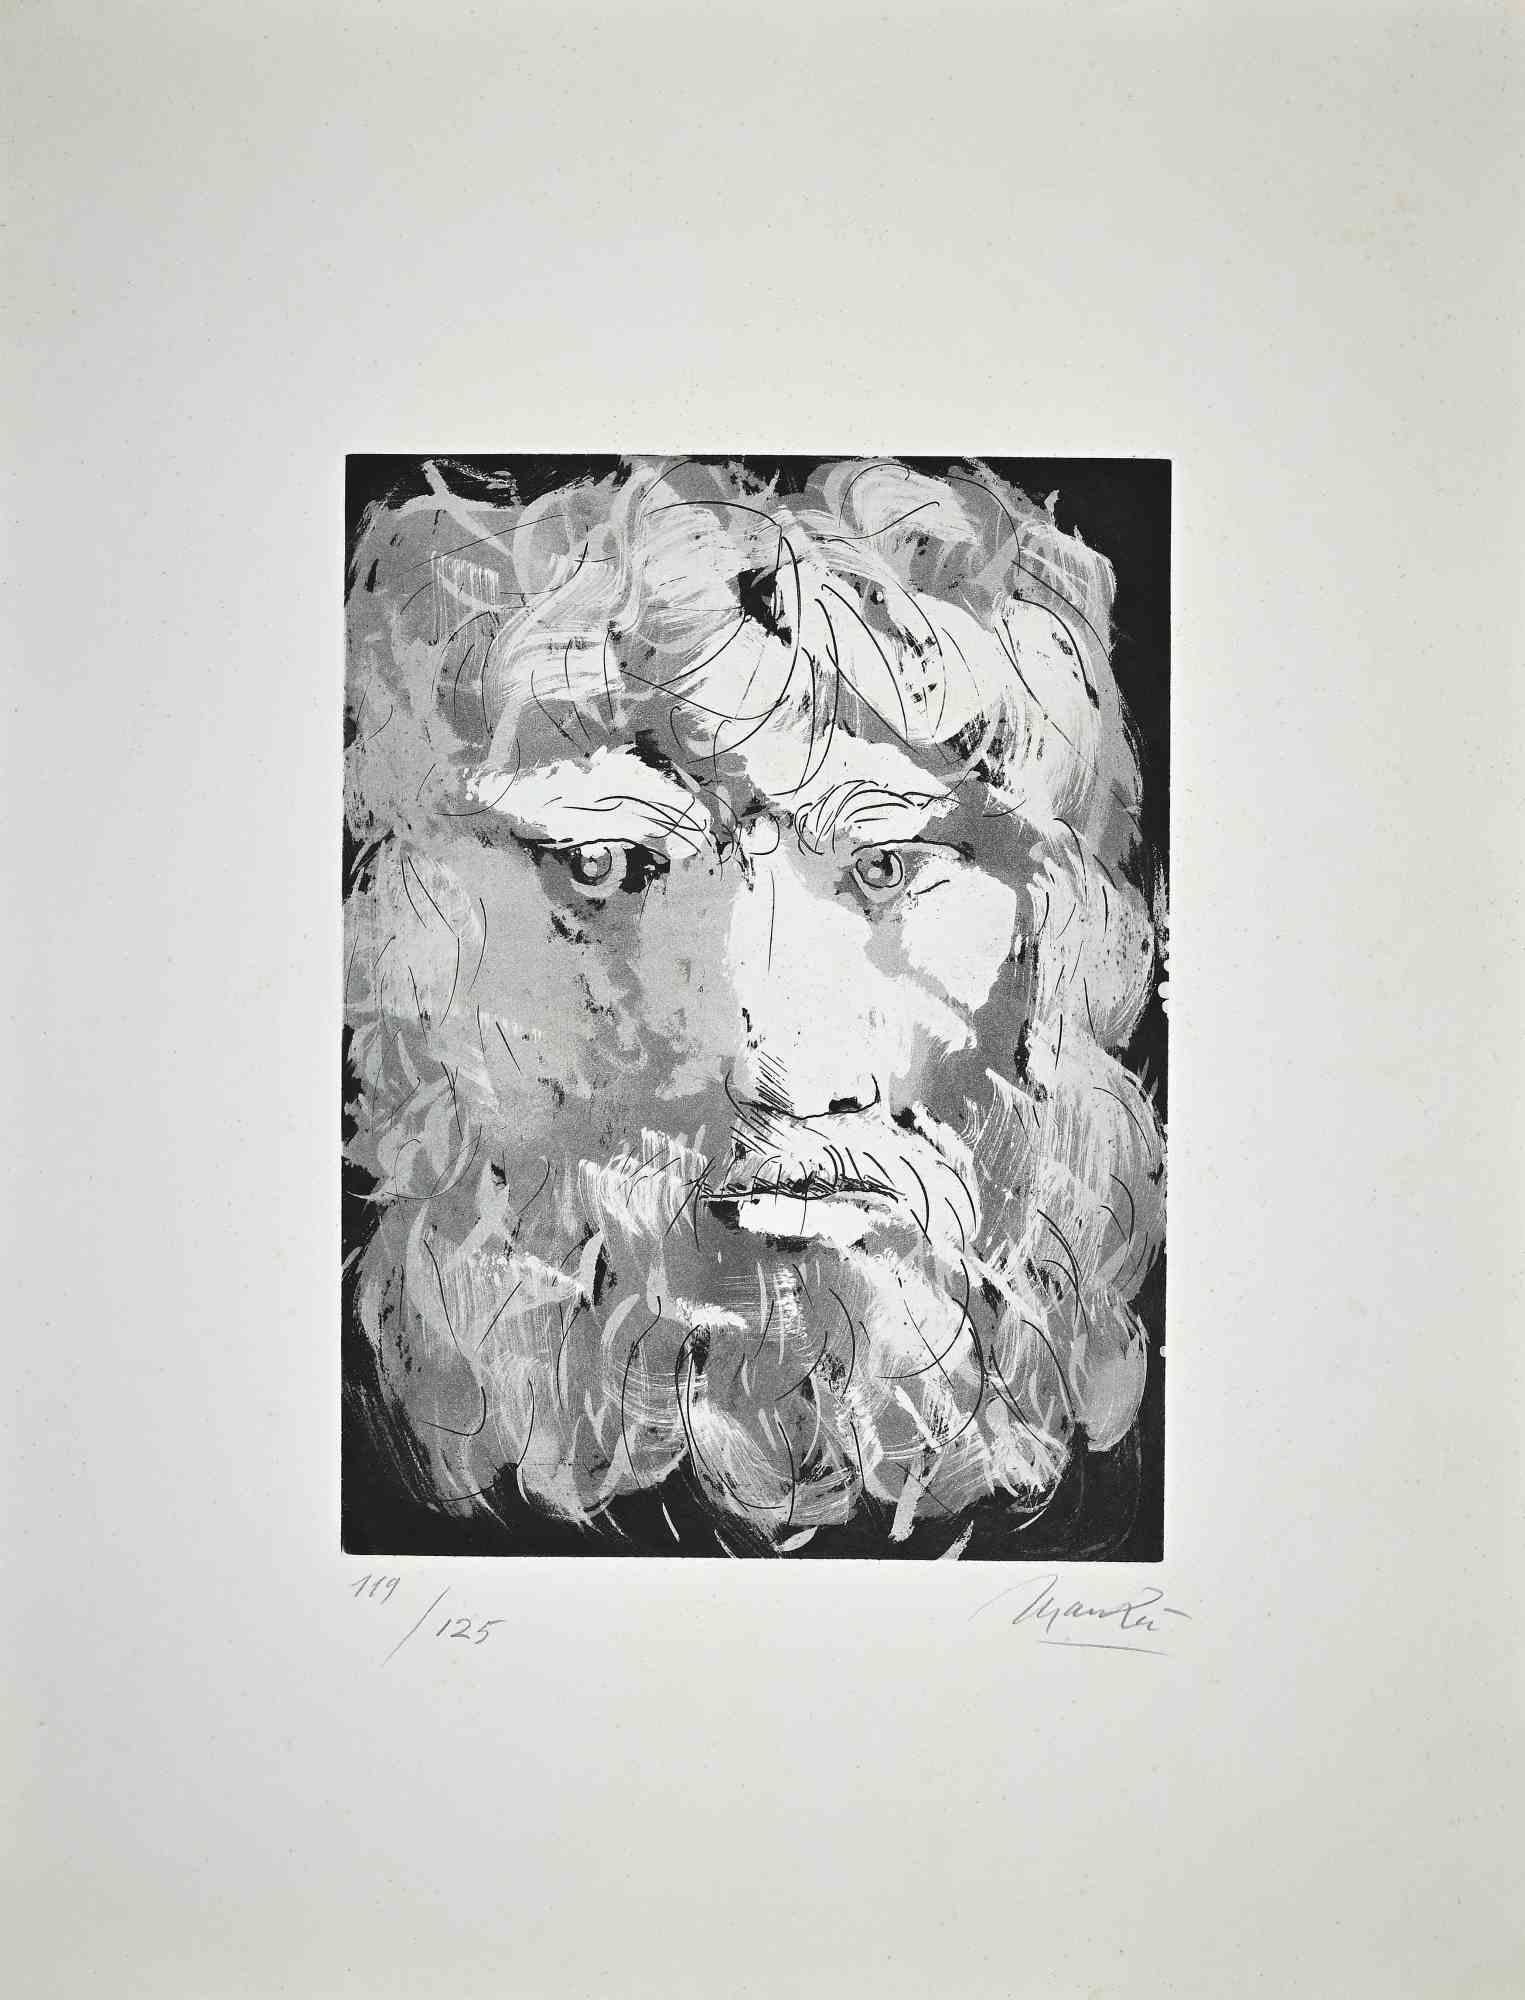 Giacomo Manzú Portrait Print - Portrait of King Oedipus - Etching by Giacomo Manzù - 1970